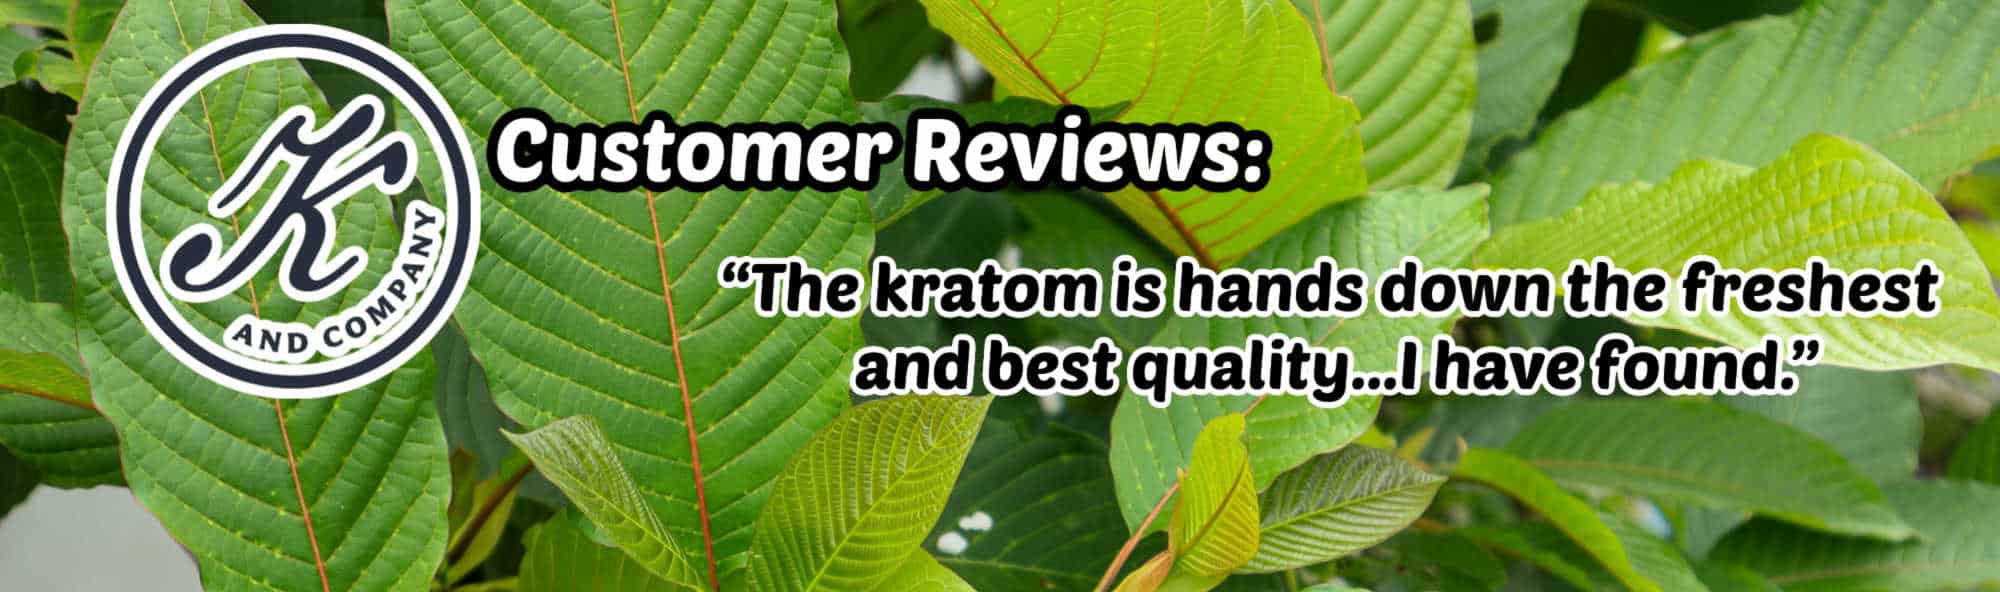 image of kratom and company customer reviews